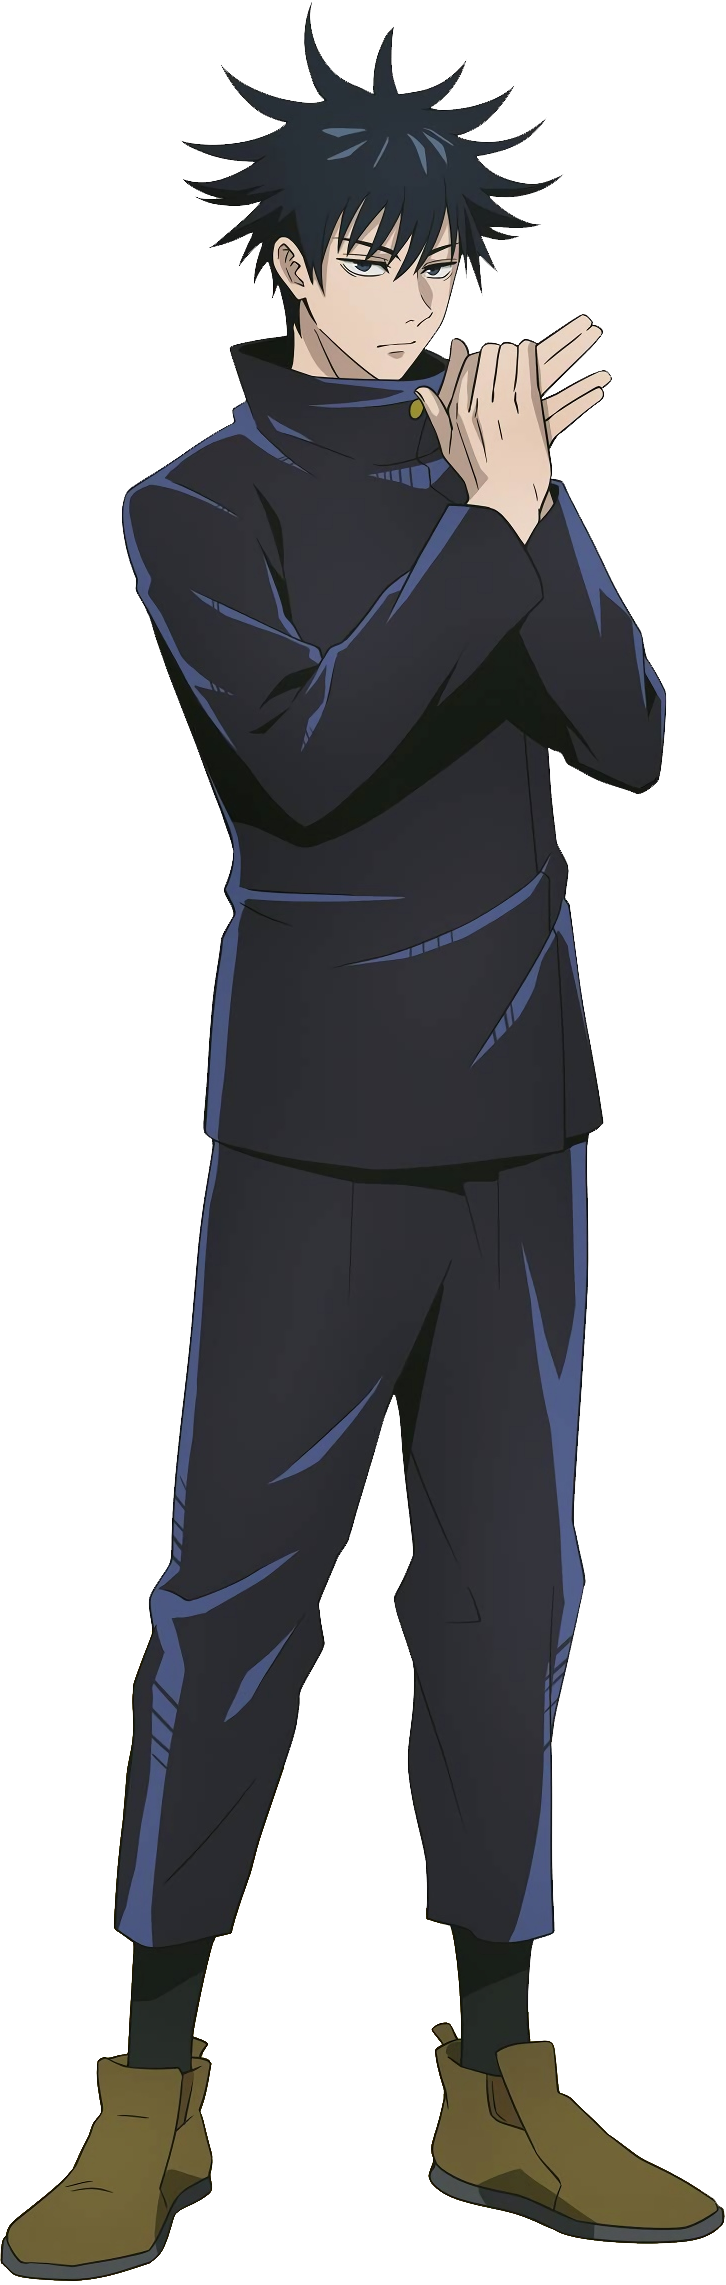 Image of Fushiguro Megumi from Jujutsu Kaisen anime